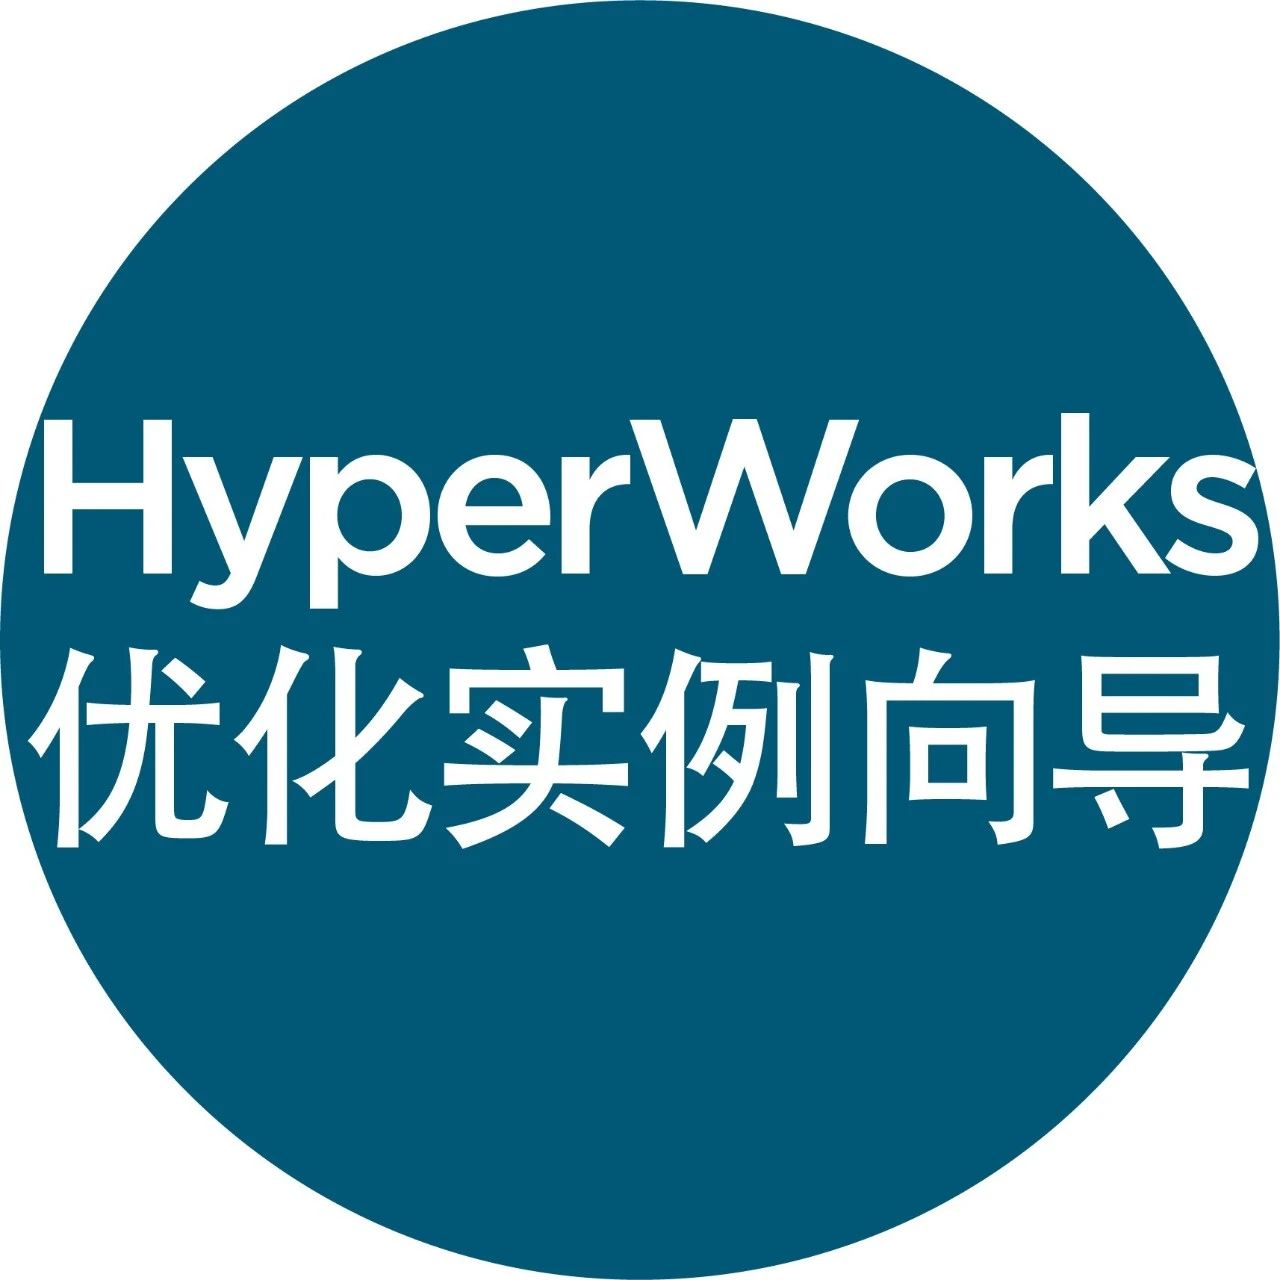 【HyperWorks优化实例向导】之自由形状优化